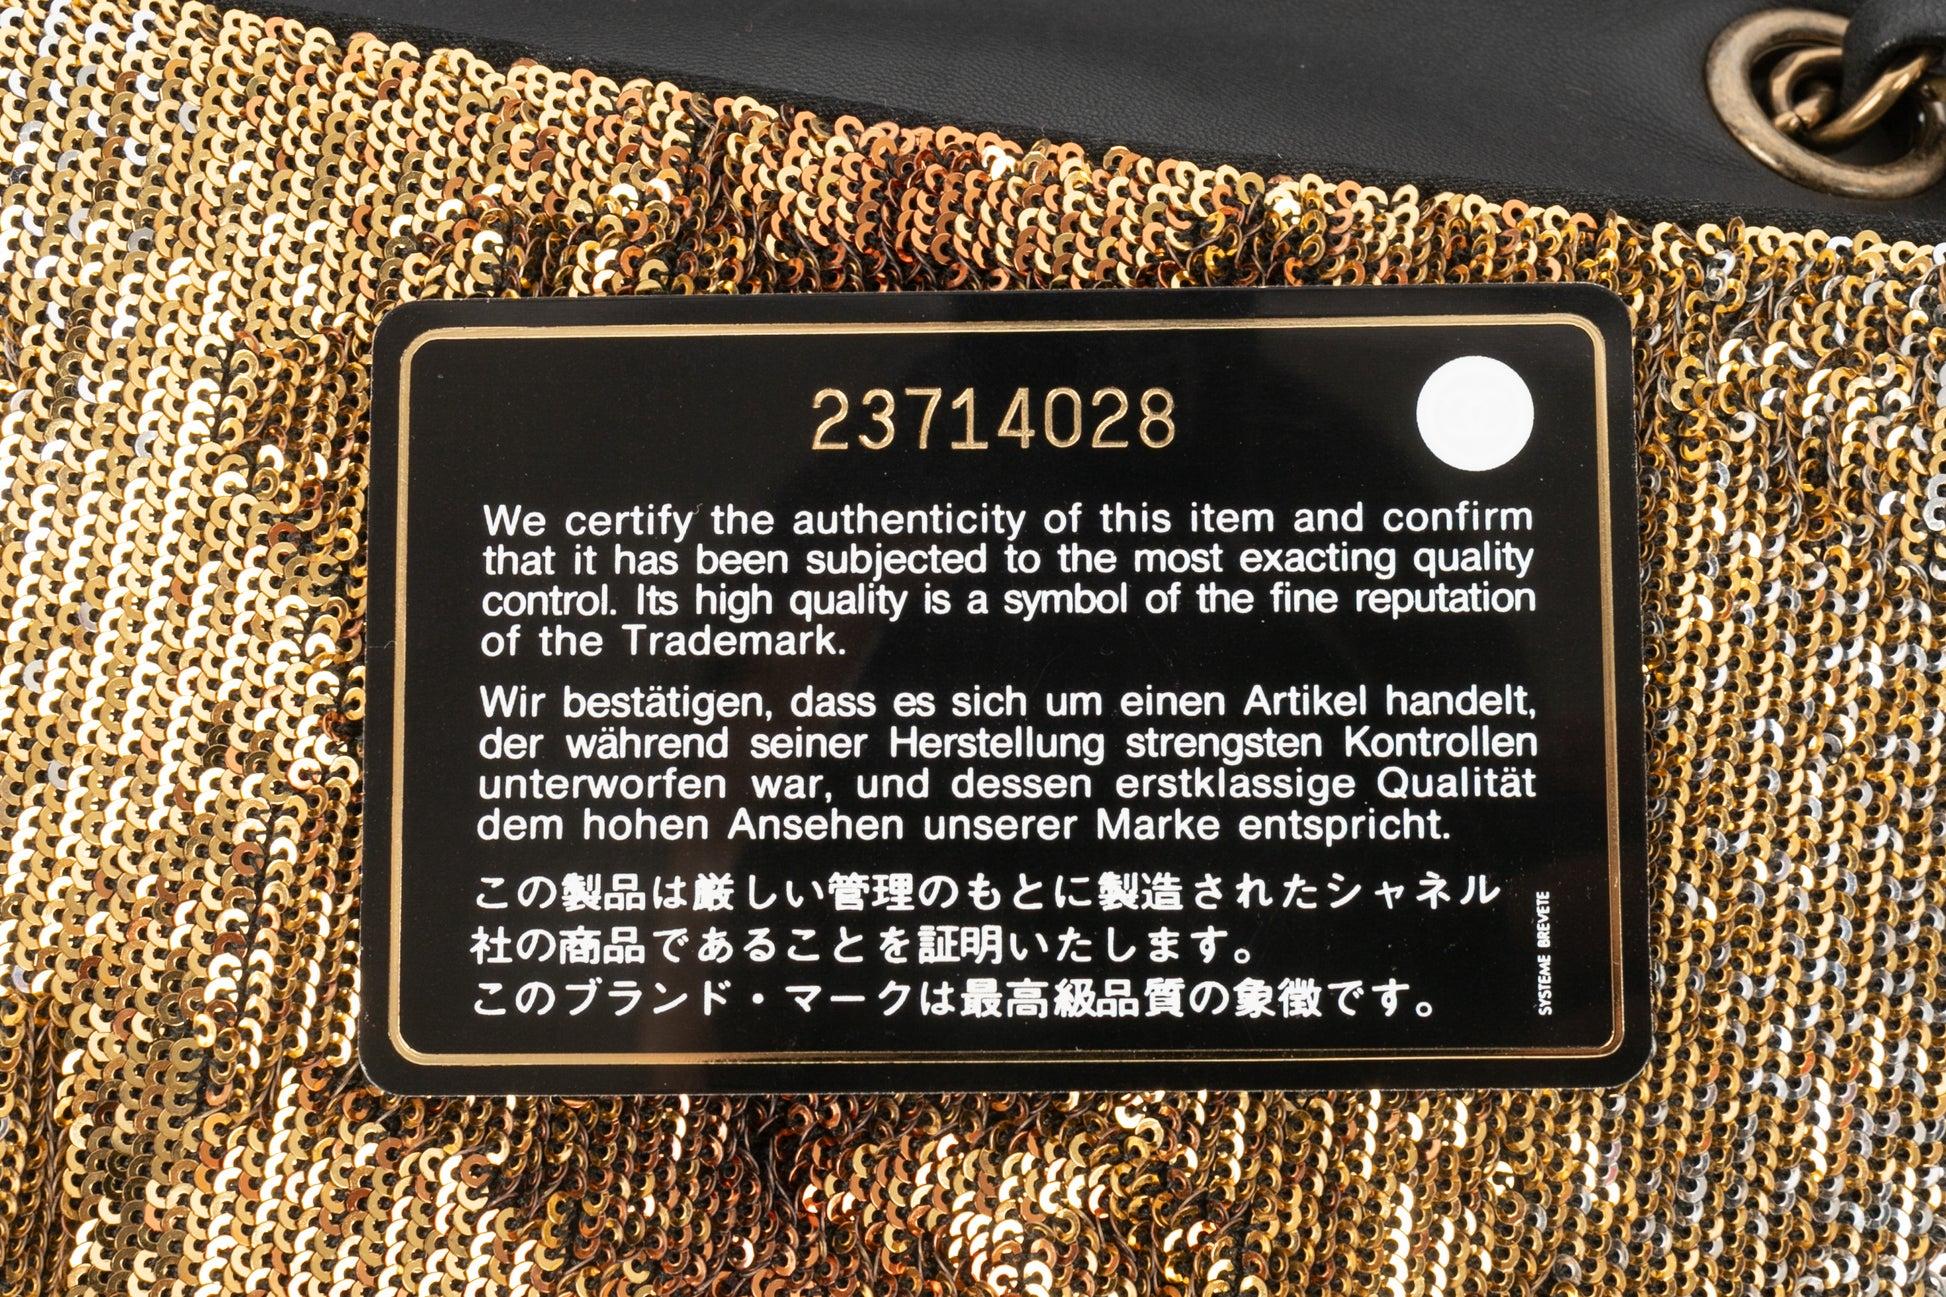 Chanel Timeless Bag Covered in Sequins, Black Leather & Gold Metal Details, 2017 8